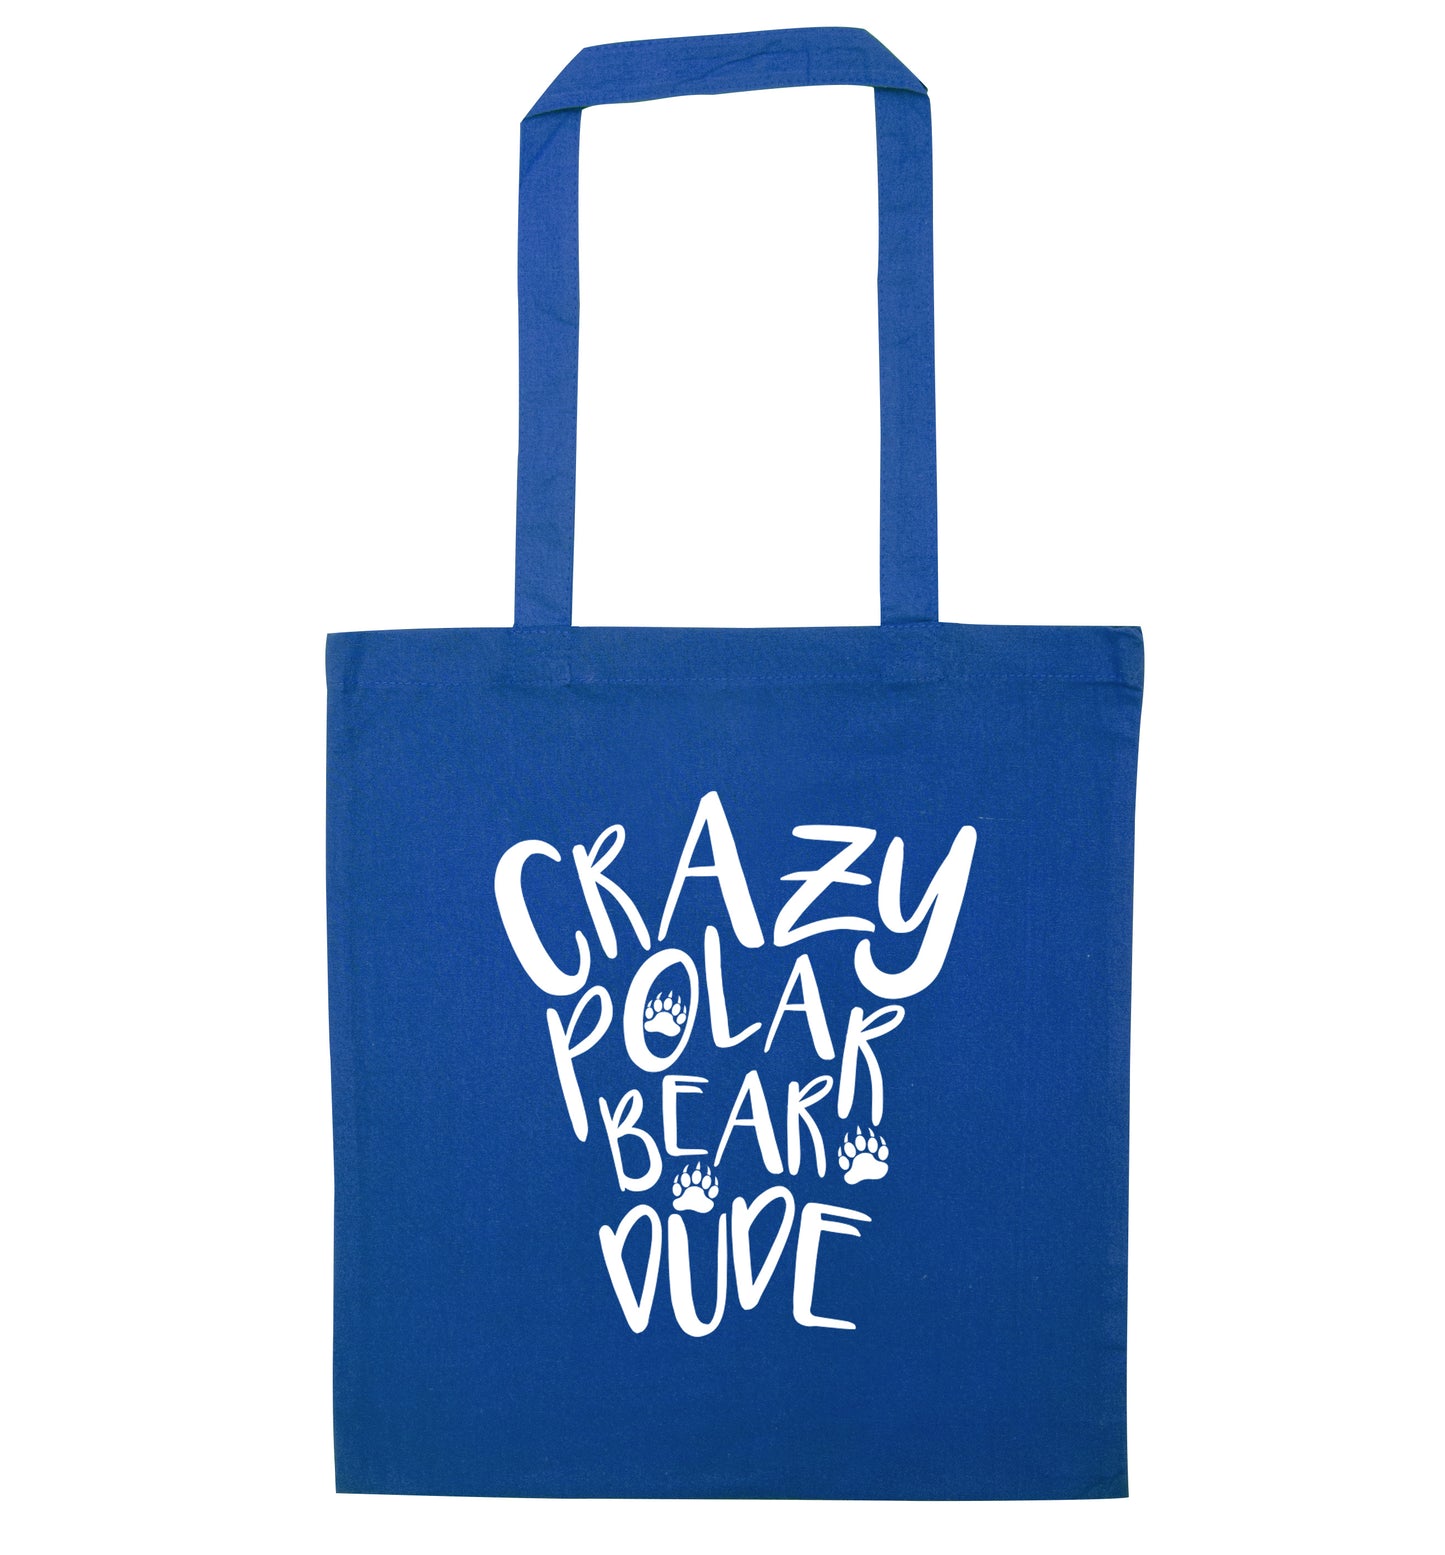 Crazy polar bear dude blue tote bag